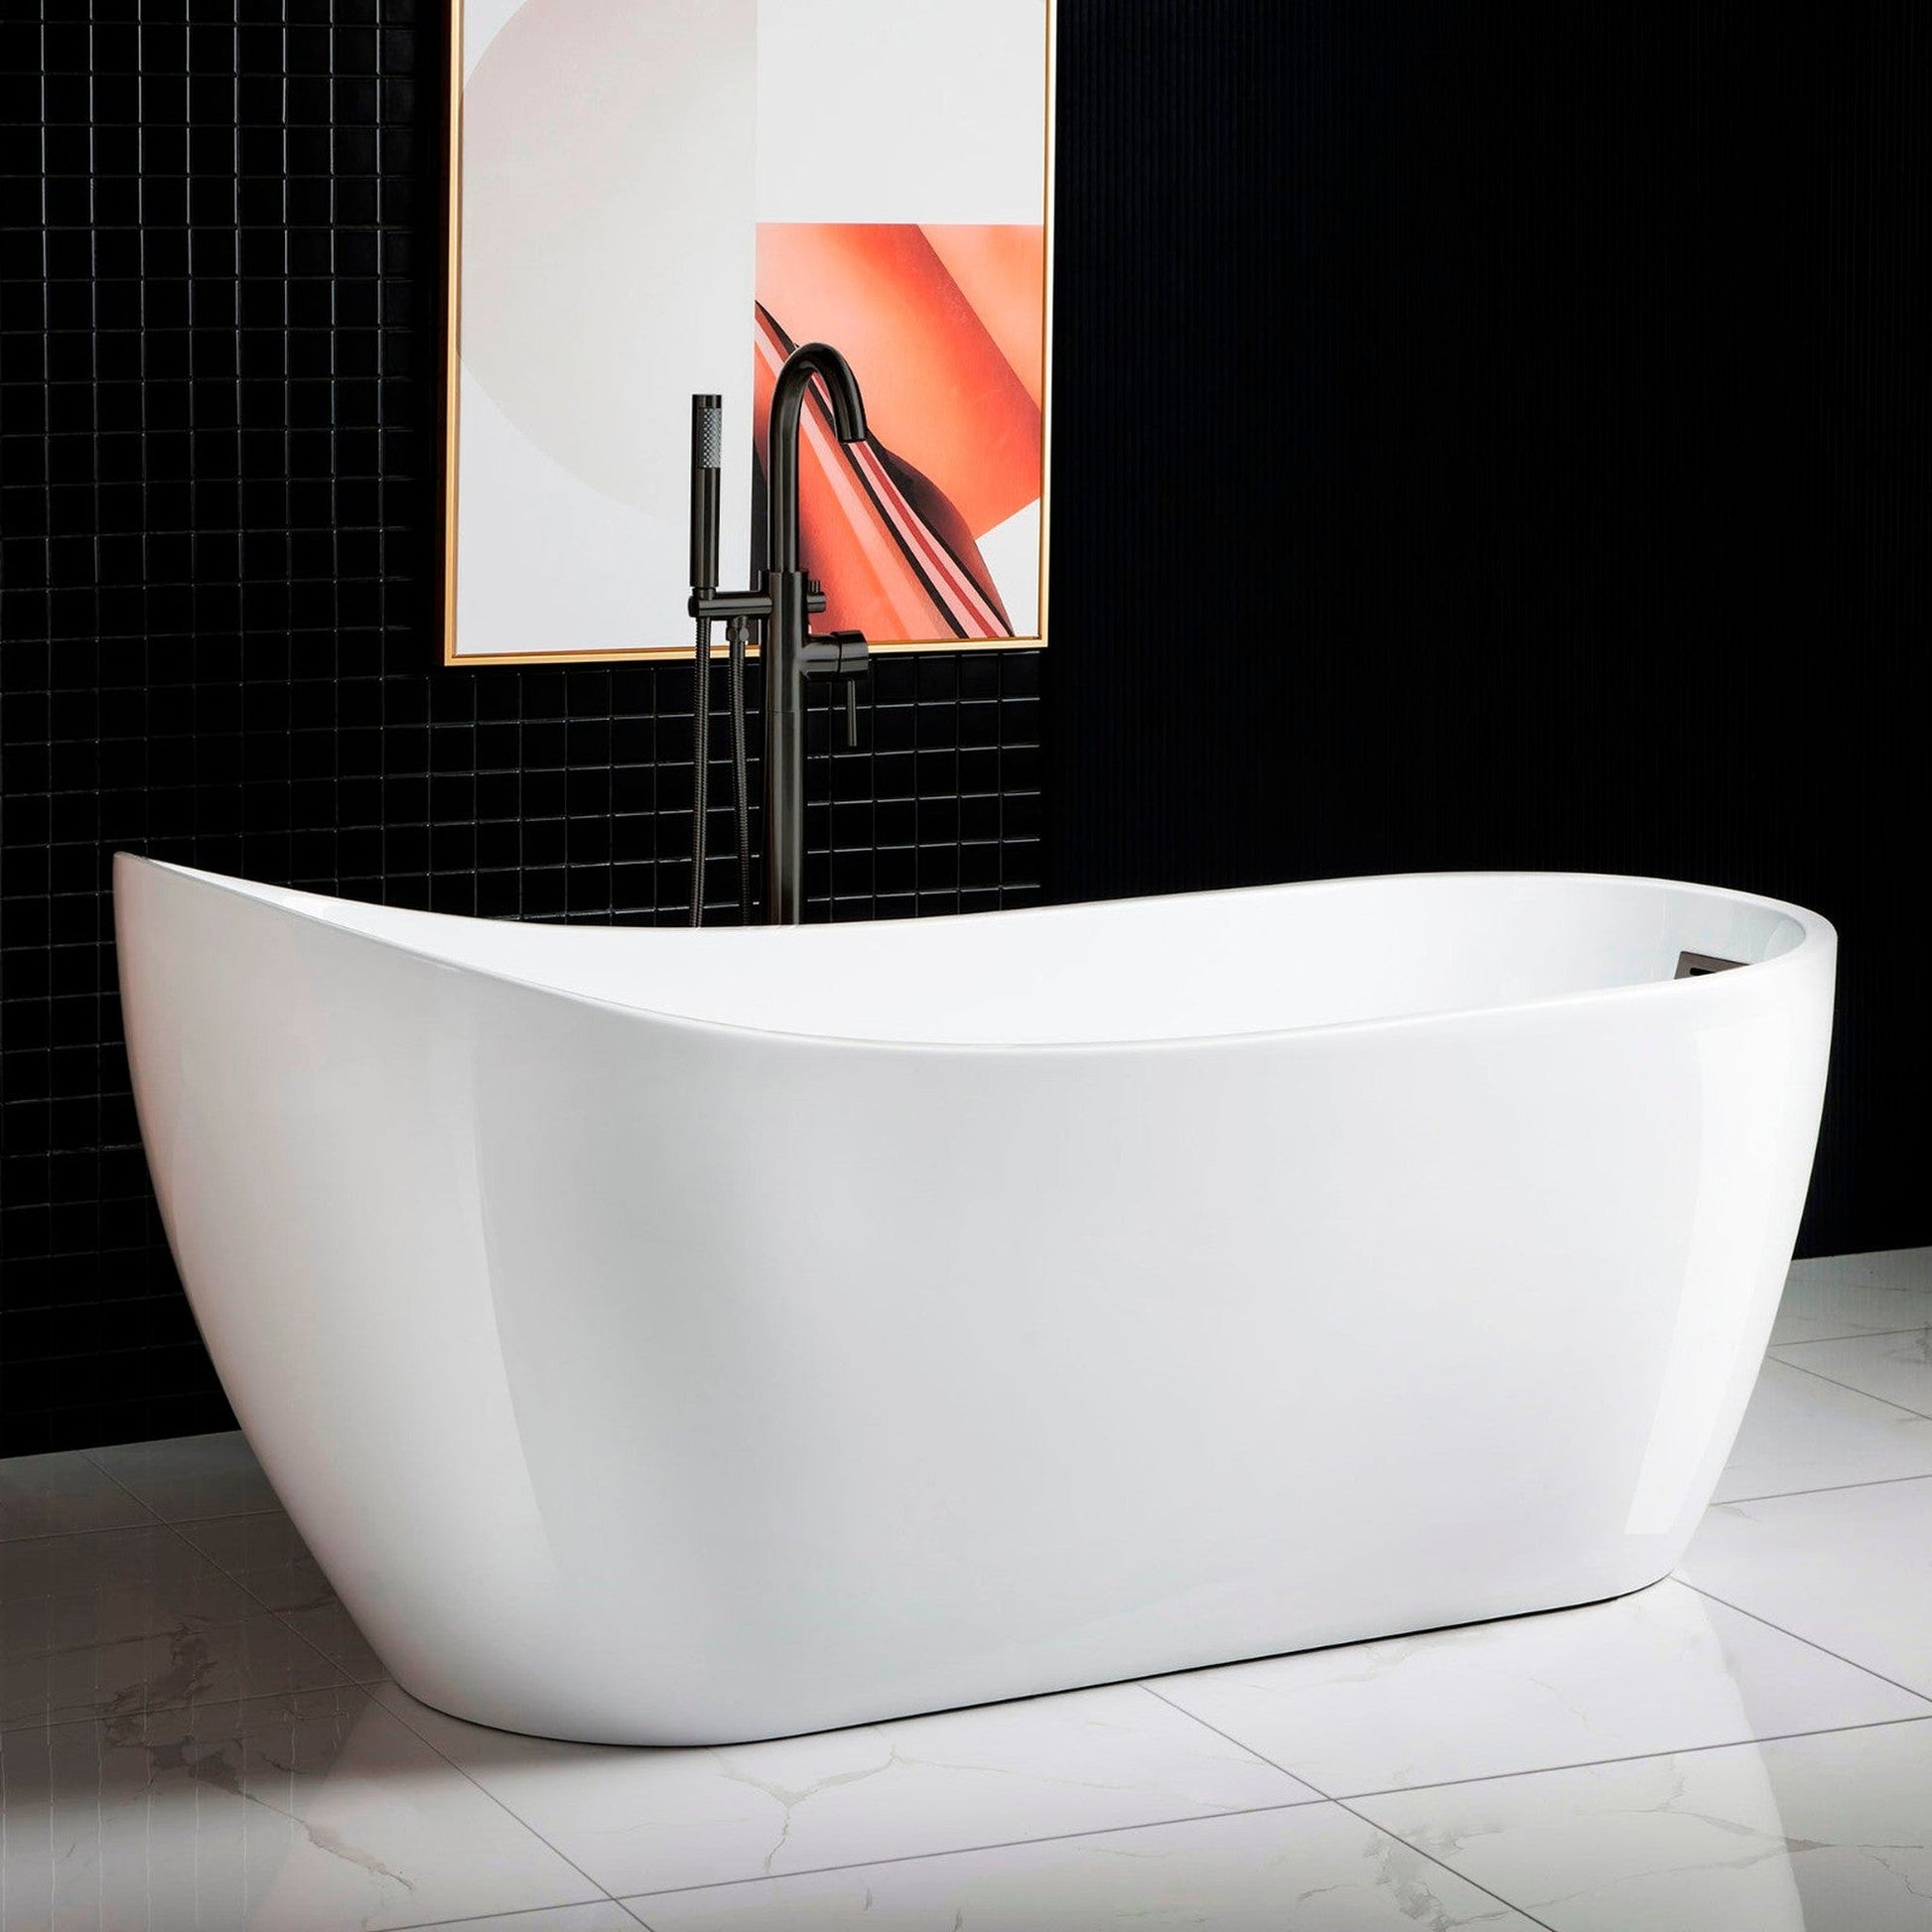 WoodBridge B0001 67" White Acrylic Freestanding Soaking Bathtub With Matte Black Drain, Overflow, F0072MBVT Tub Filler and Caddy Tray